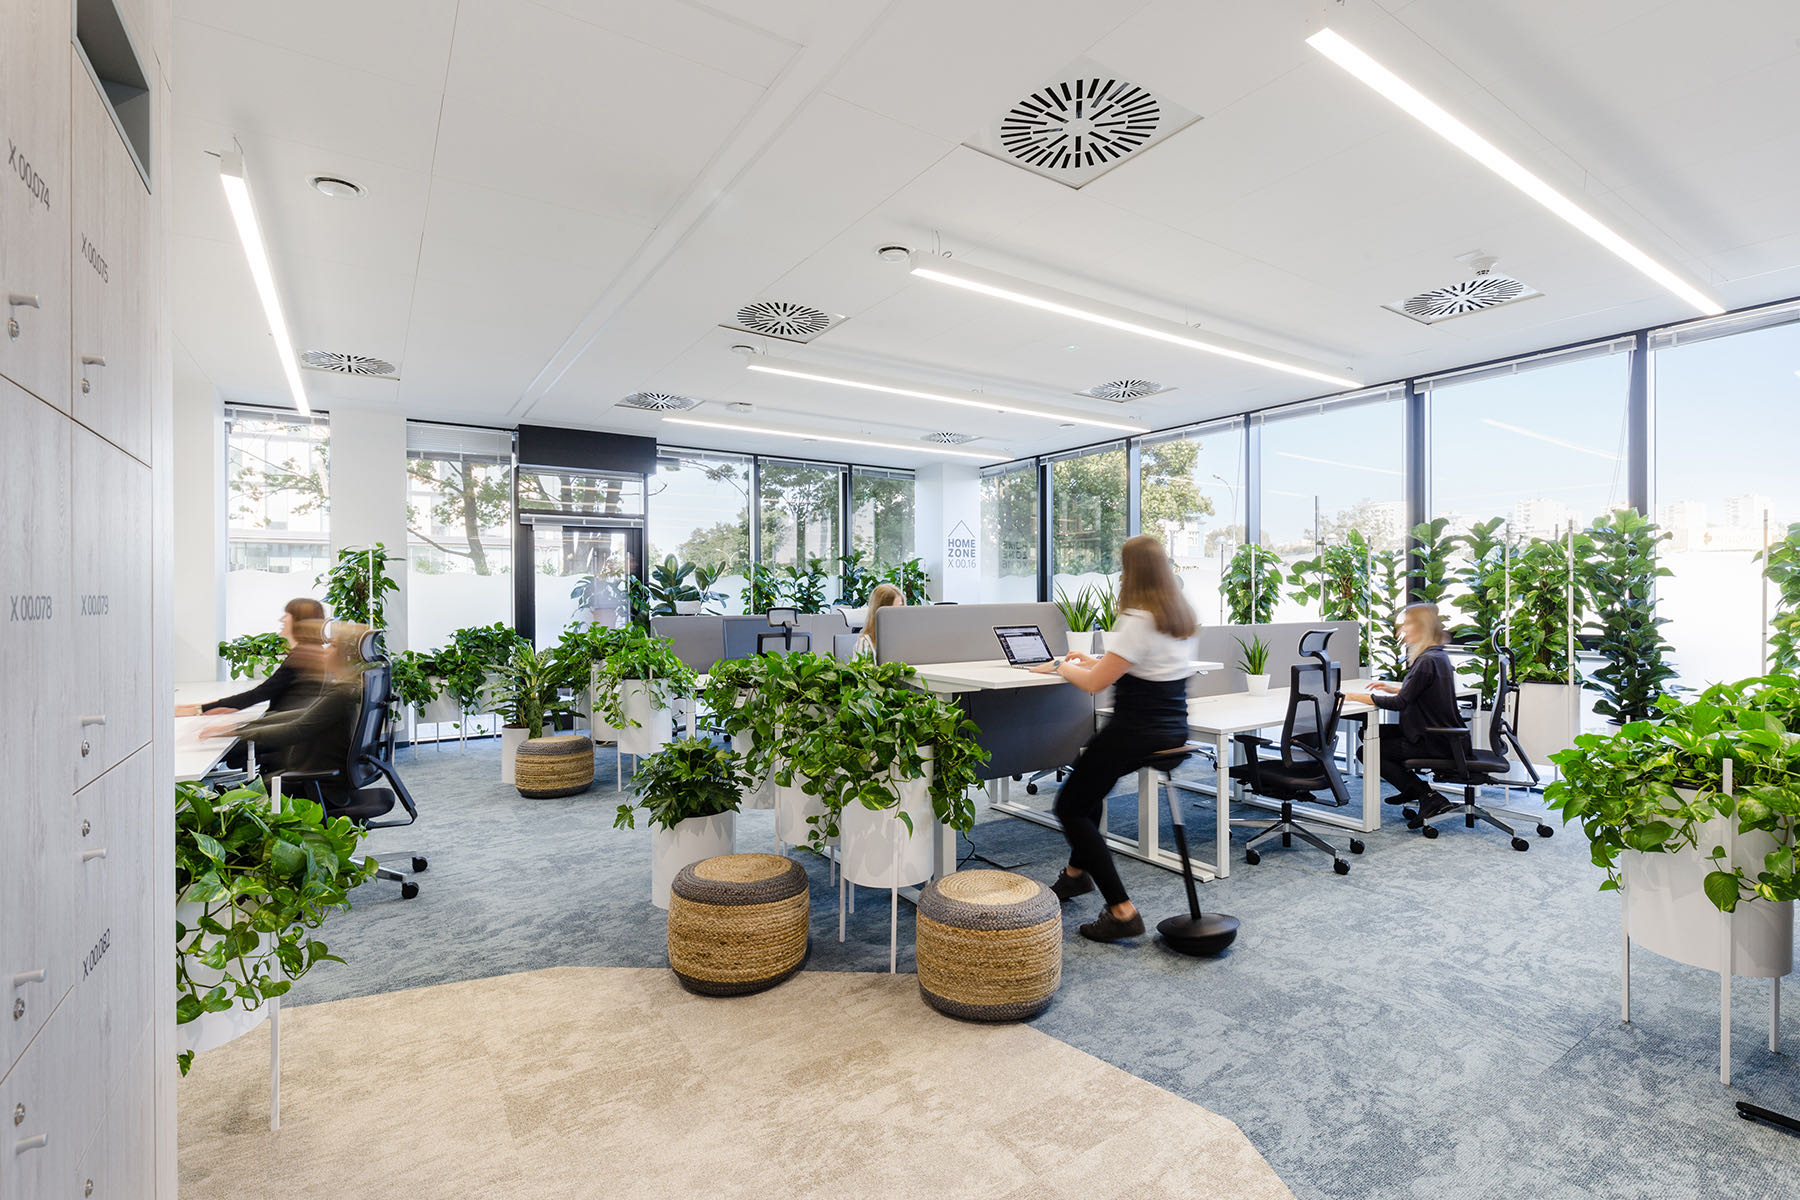 A Look Inside Nordea’s Biophilic Office in Gdynia